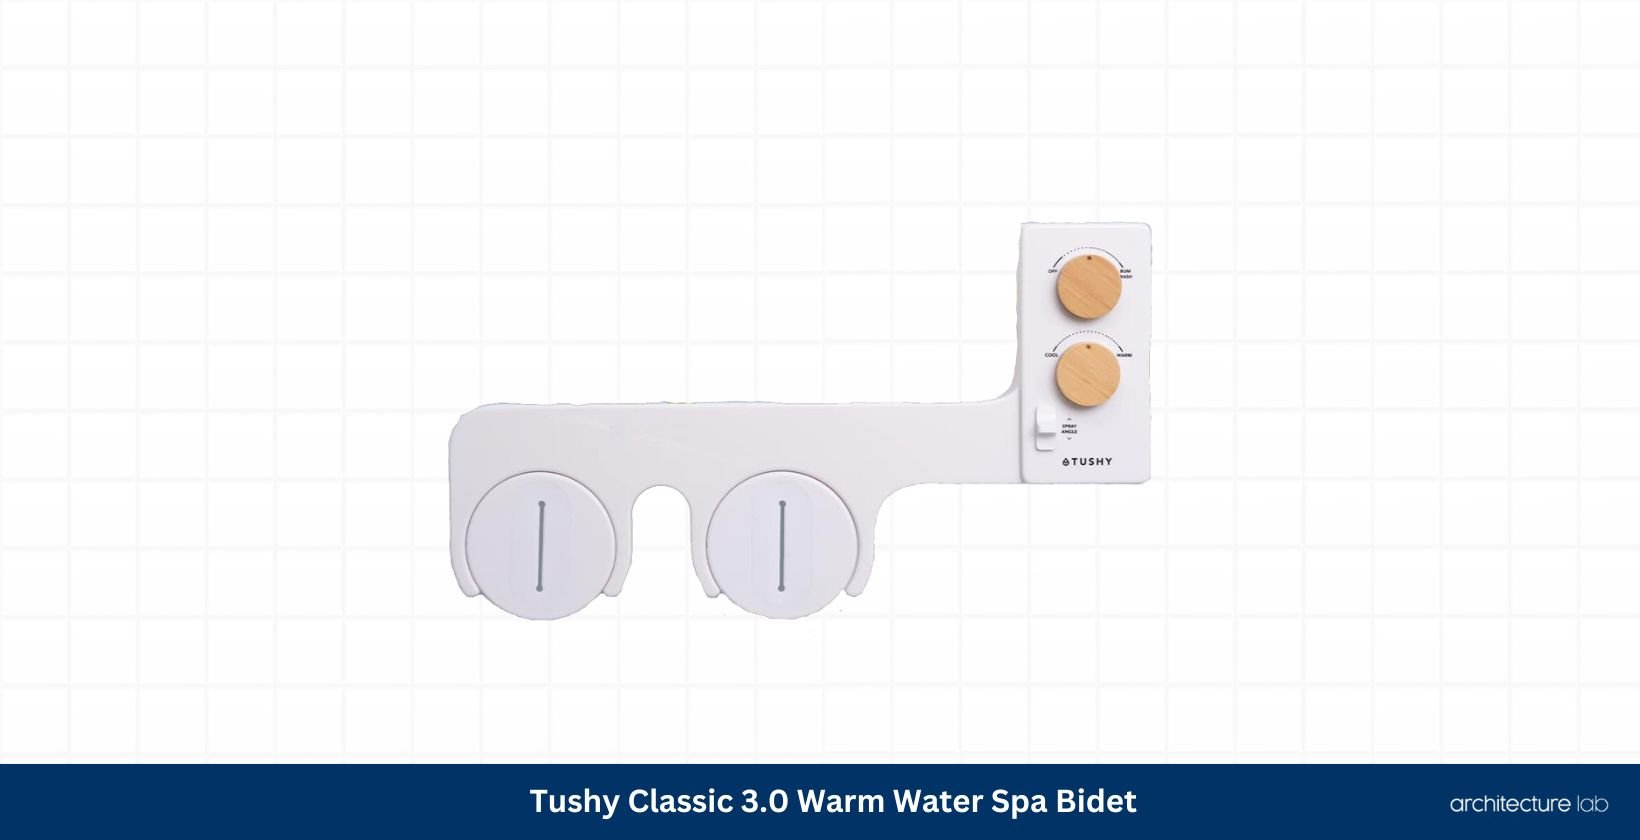 Tushy classic 3. 0 warm water spa bidet3